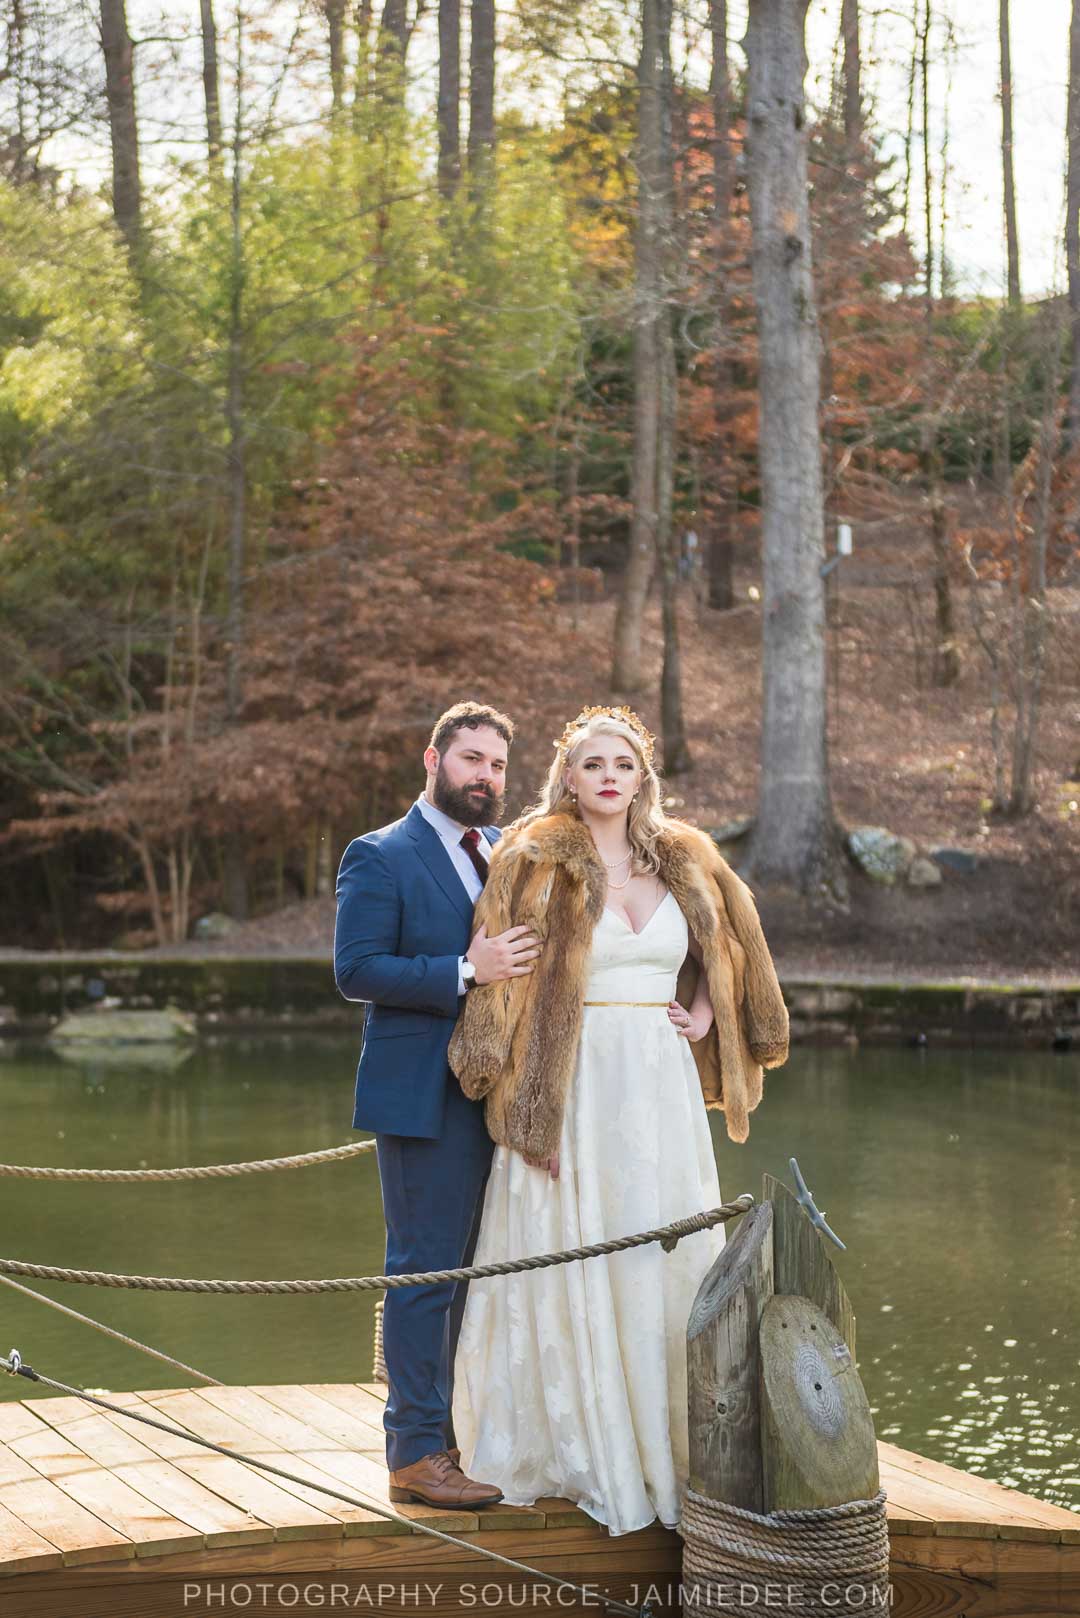 Rocky's Lake Estate Wedding Venue - Bride and Groom Portraits - couples portraits on lake